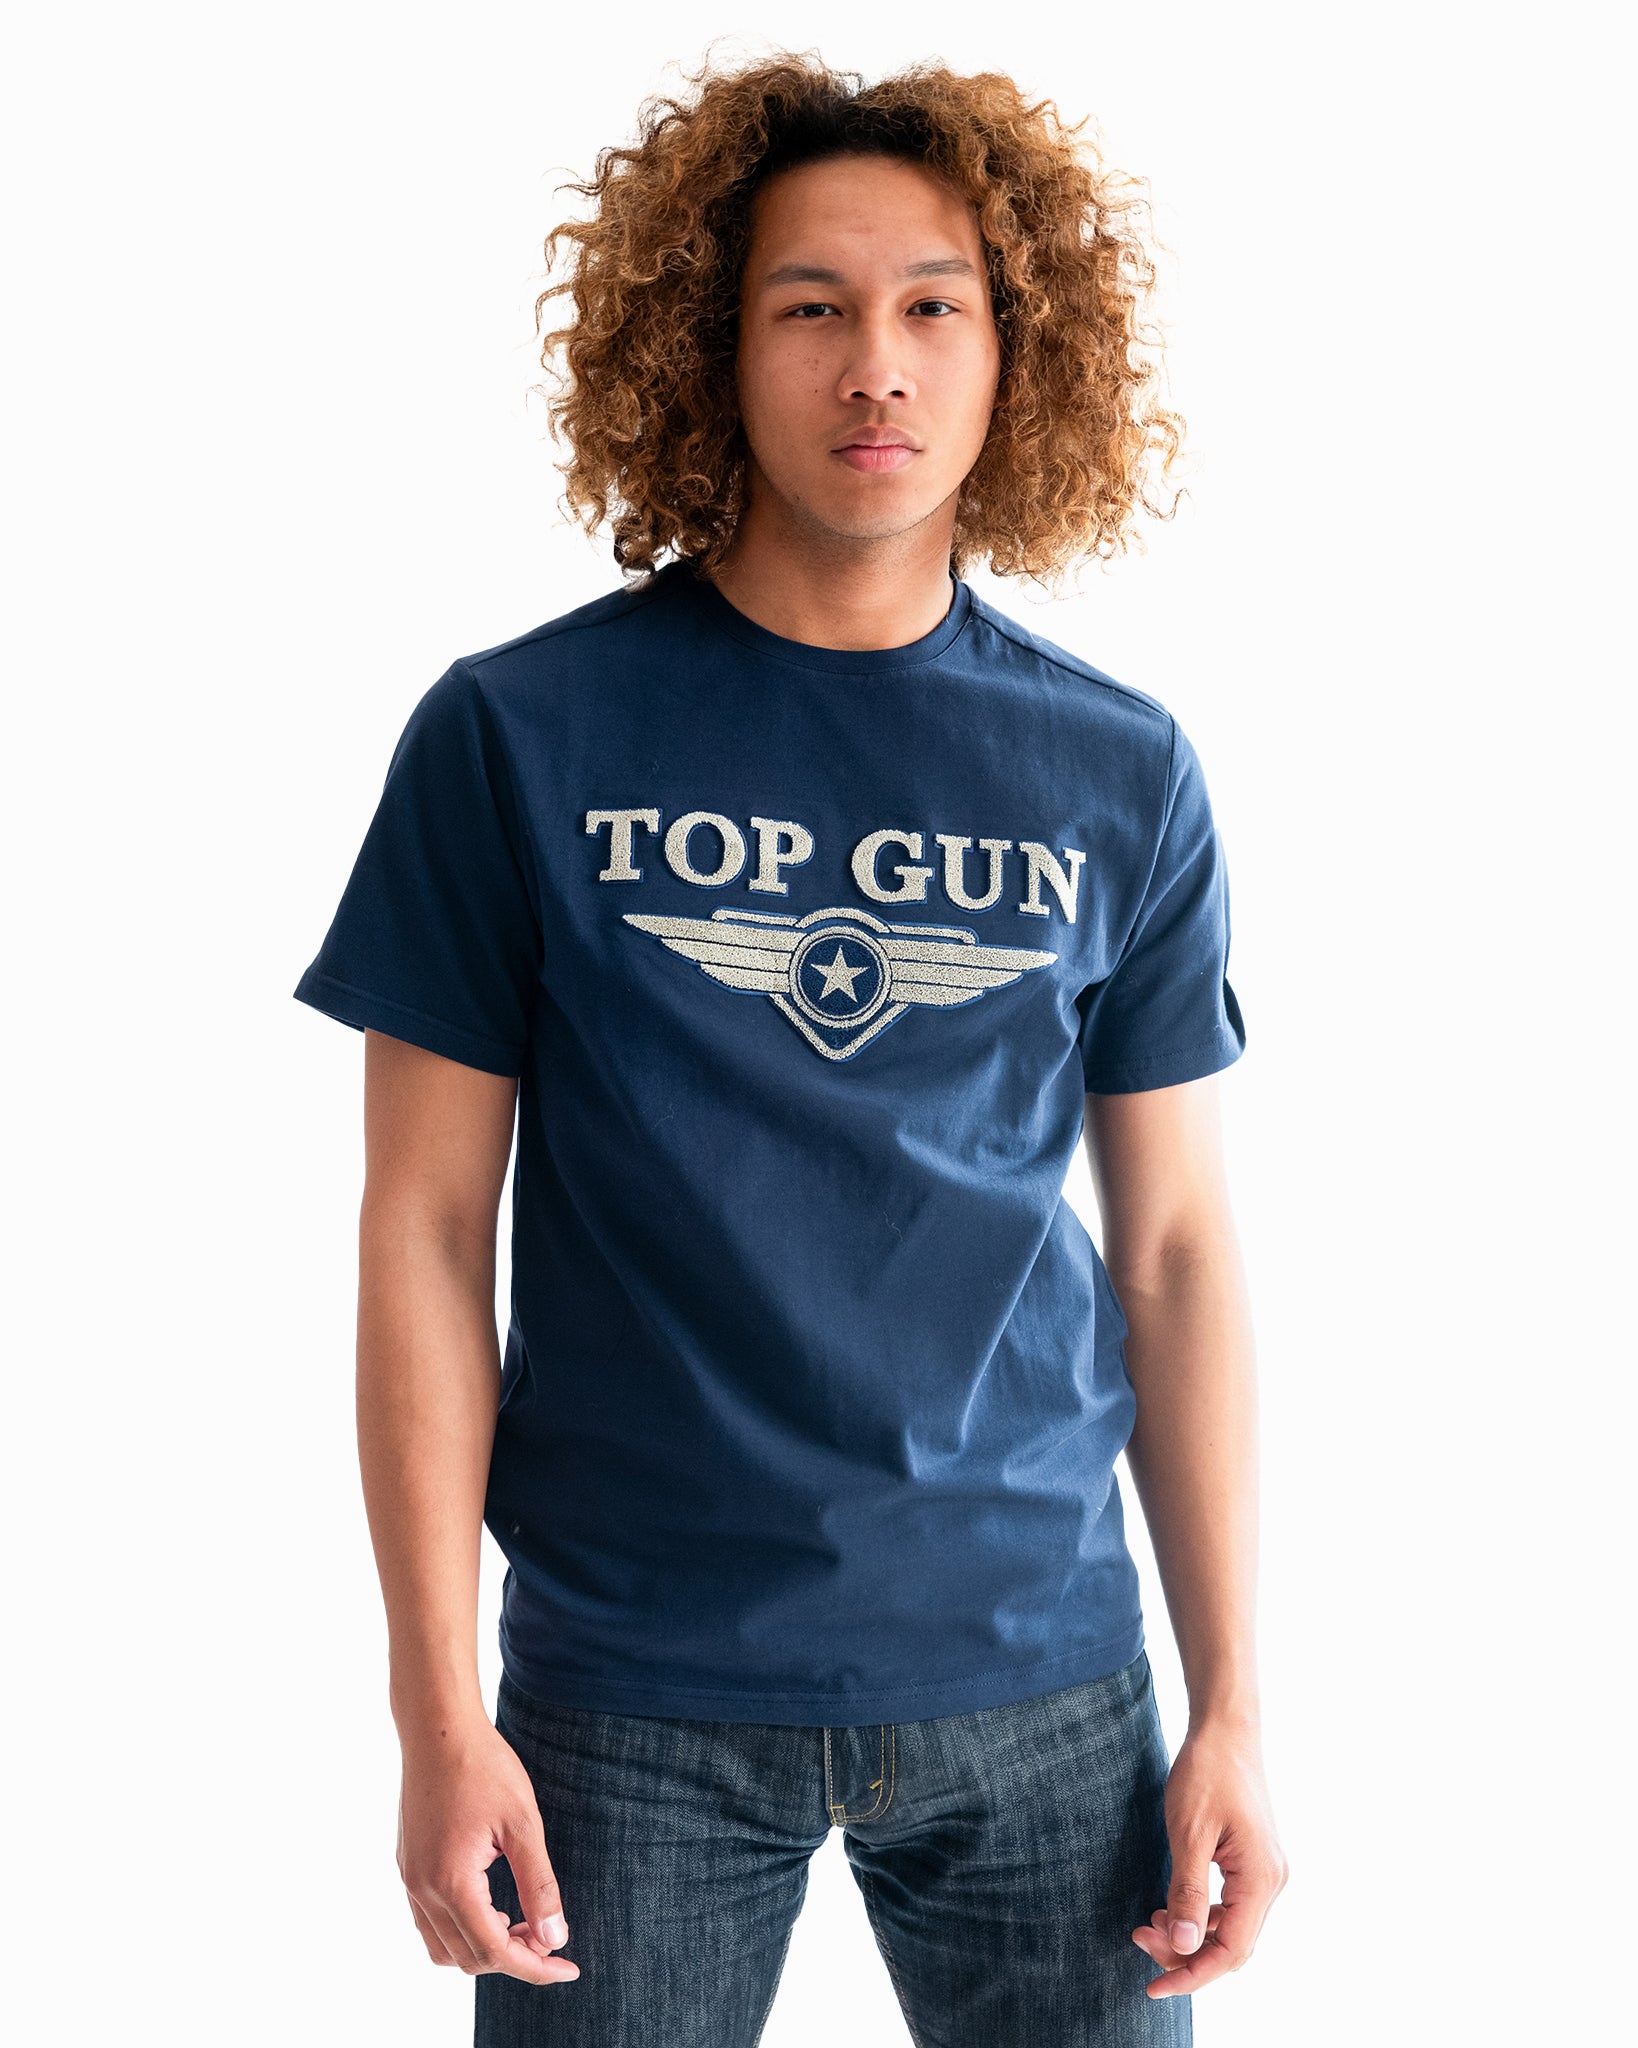 TOP GUN® TOP Top | Gun GUN – | Original TOP T-SHIRT Store T-shirts Clothing GUN \